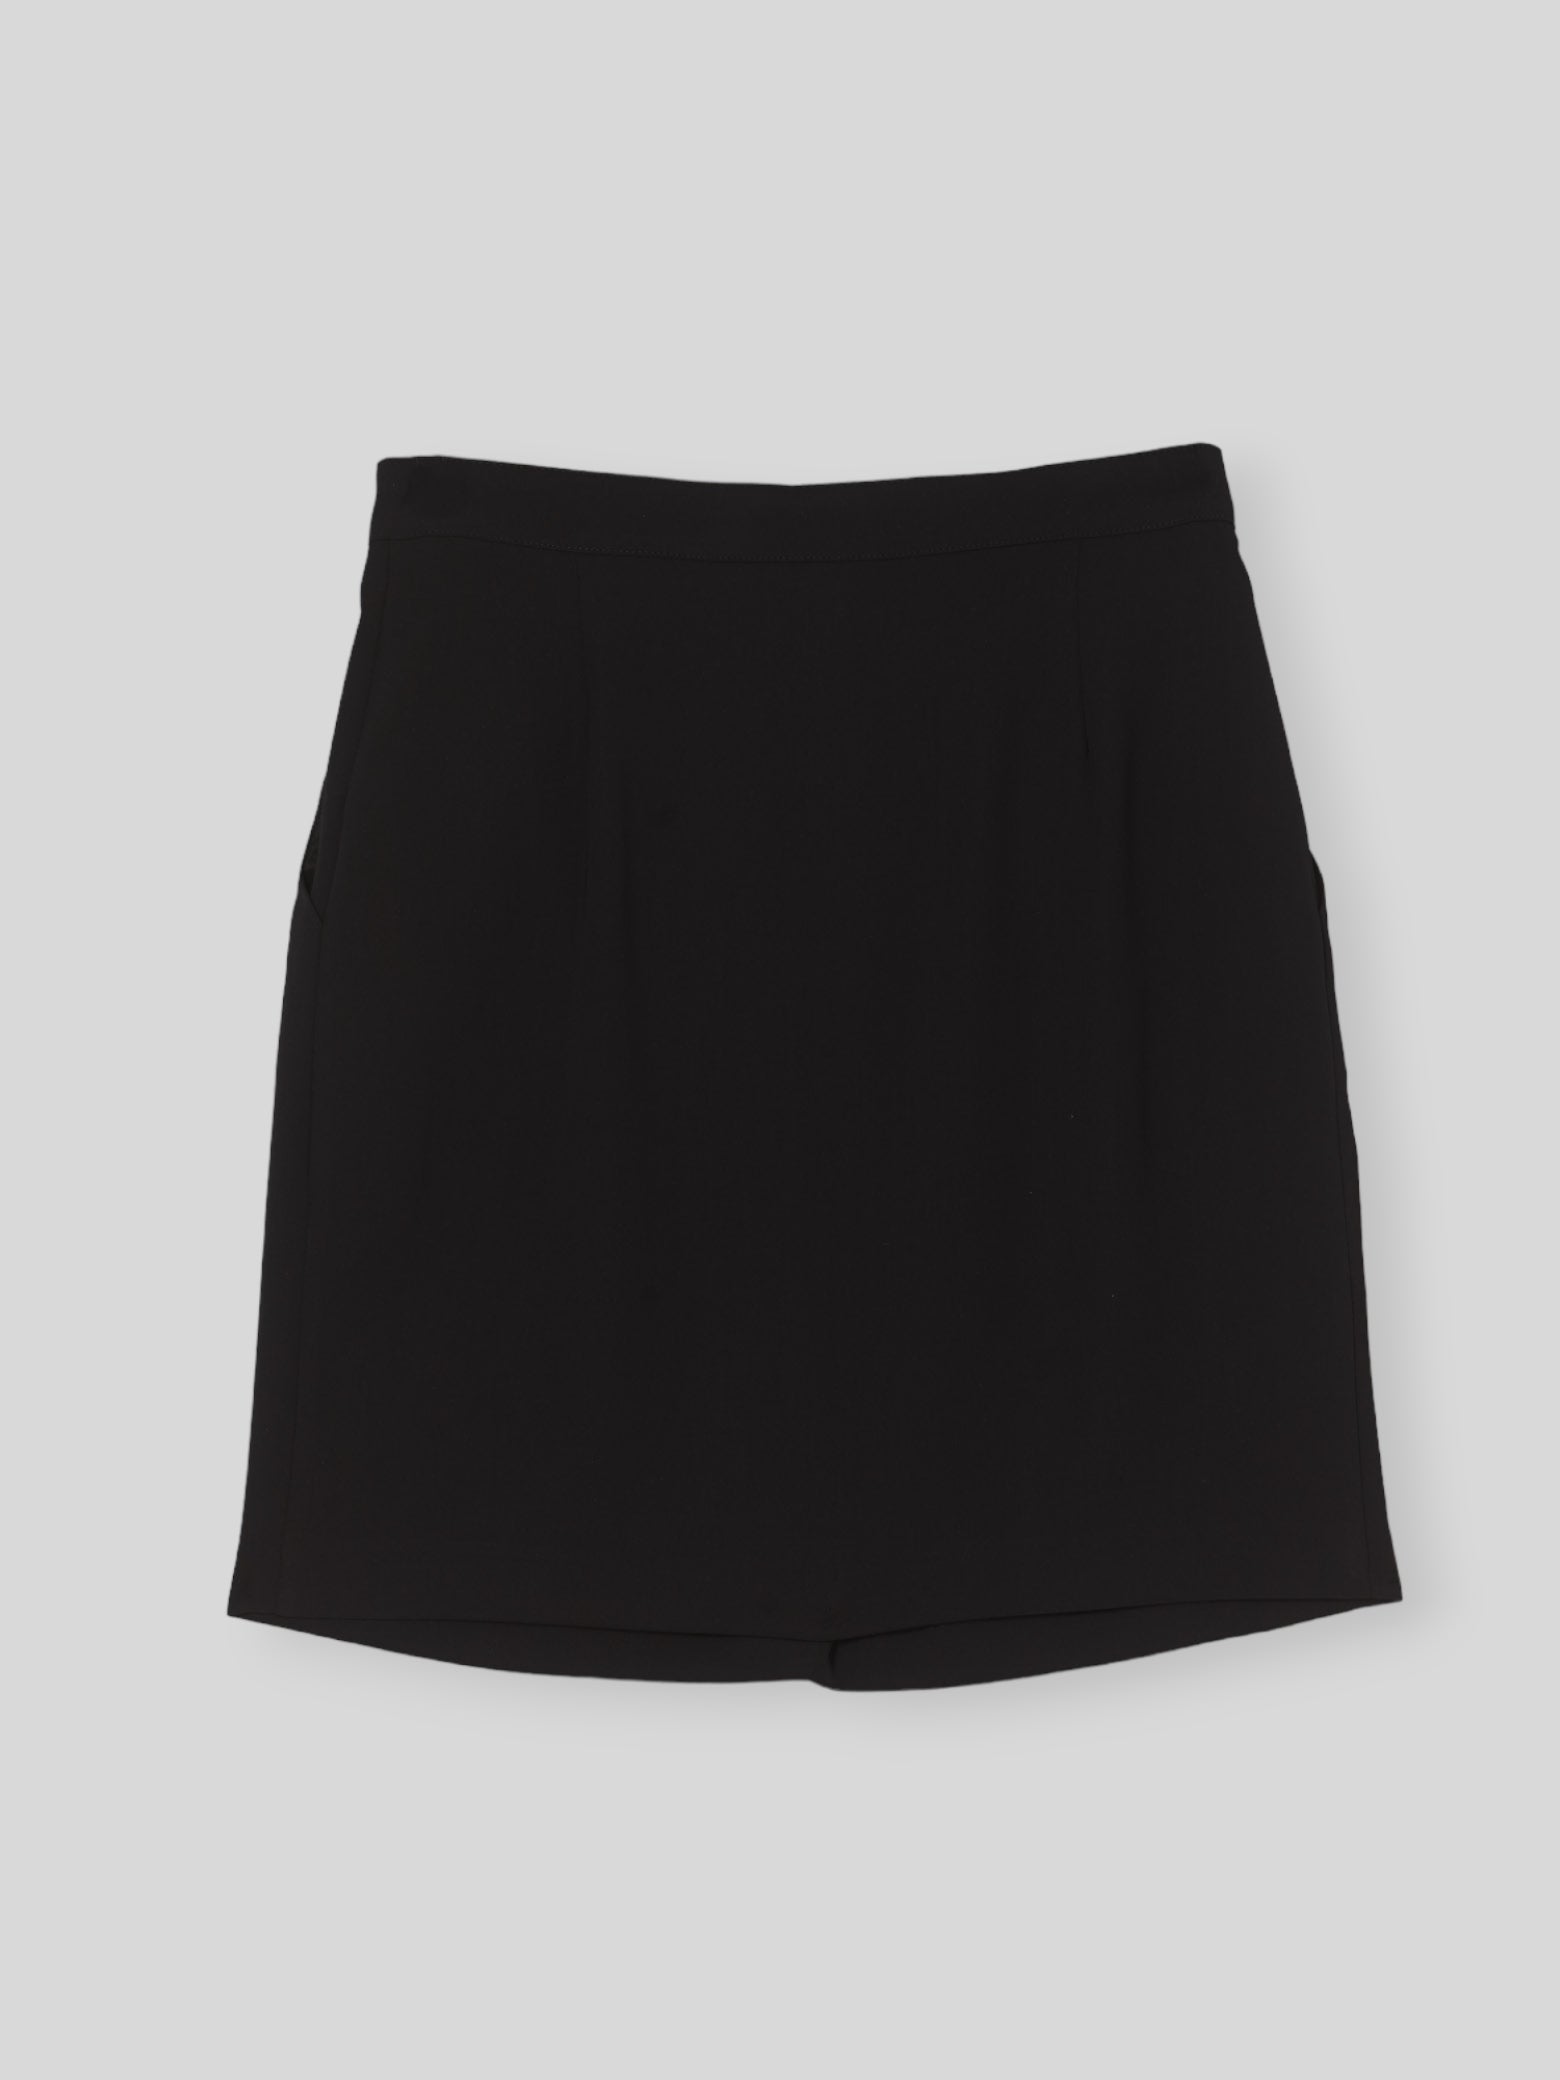 Classic black skirt